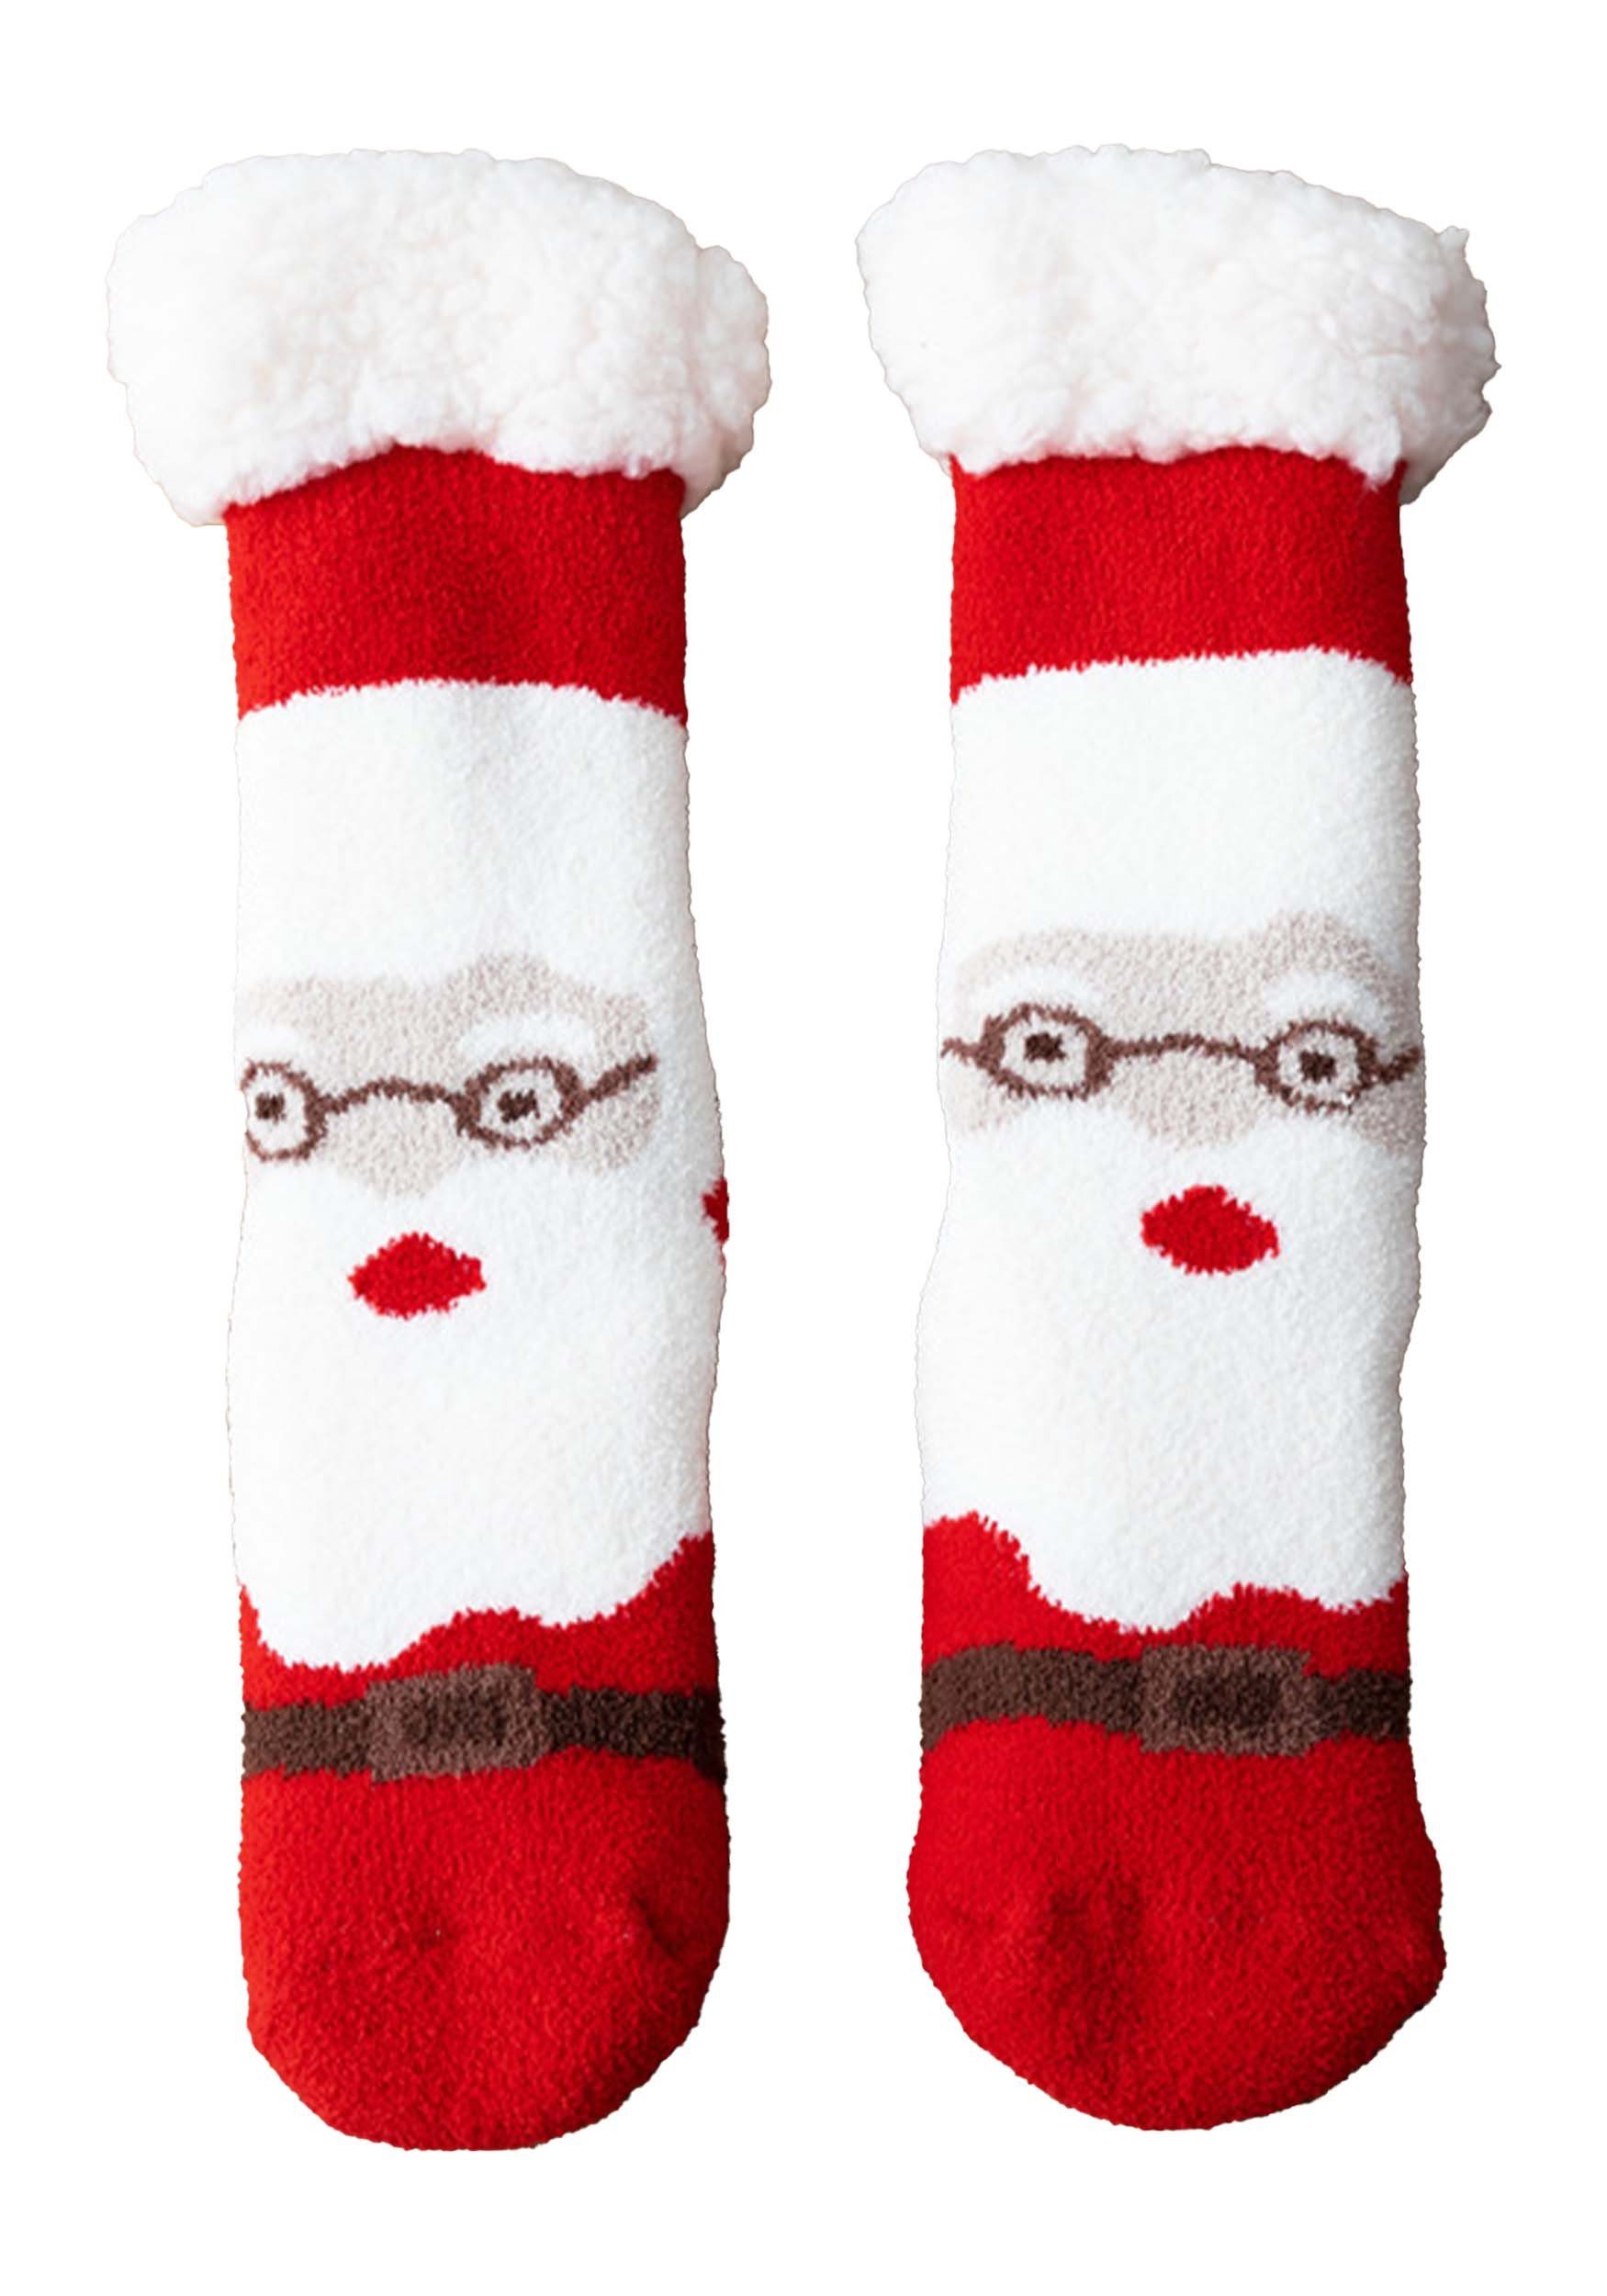 MAGICSHE ABS-Socken 1 Paar Damen ABS Socken warme Wintersocken flauschig Thermo-Socken (1-Paar, 1 pair) Nette Weihnachtssocken mit Innenfrottee Rot-Schneemann